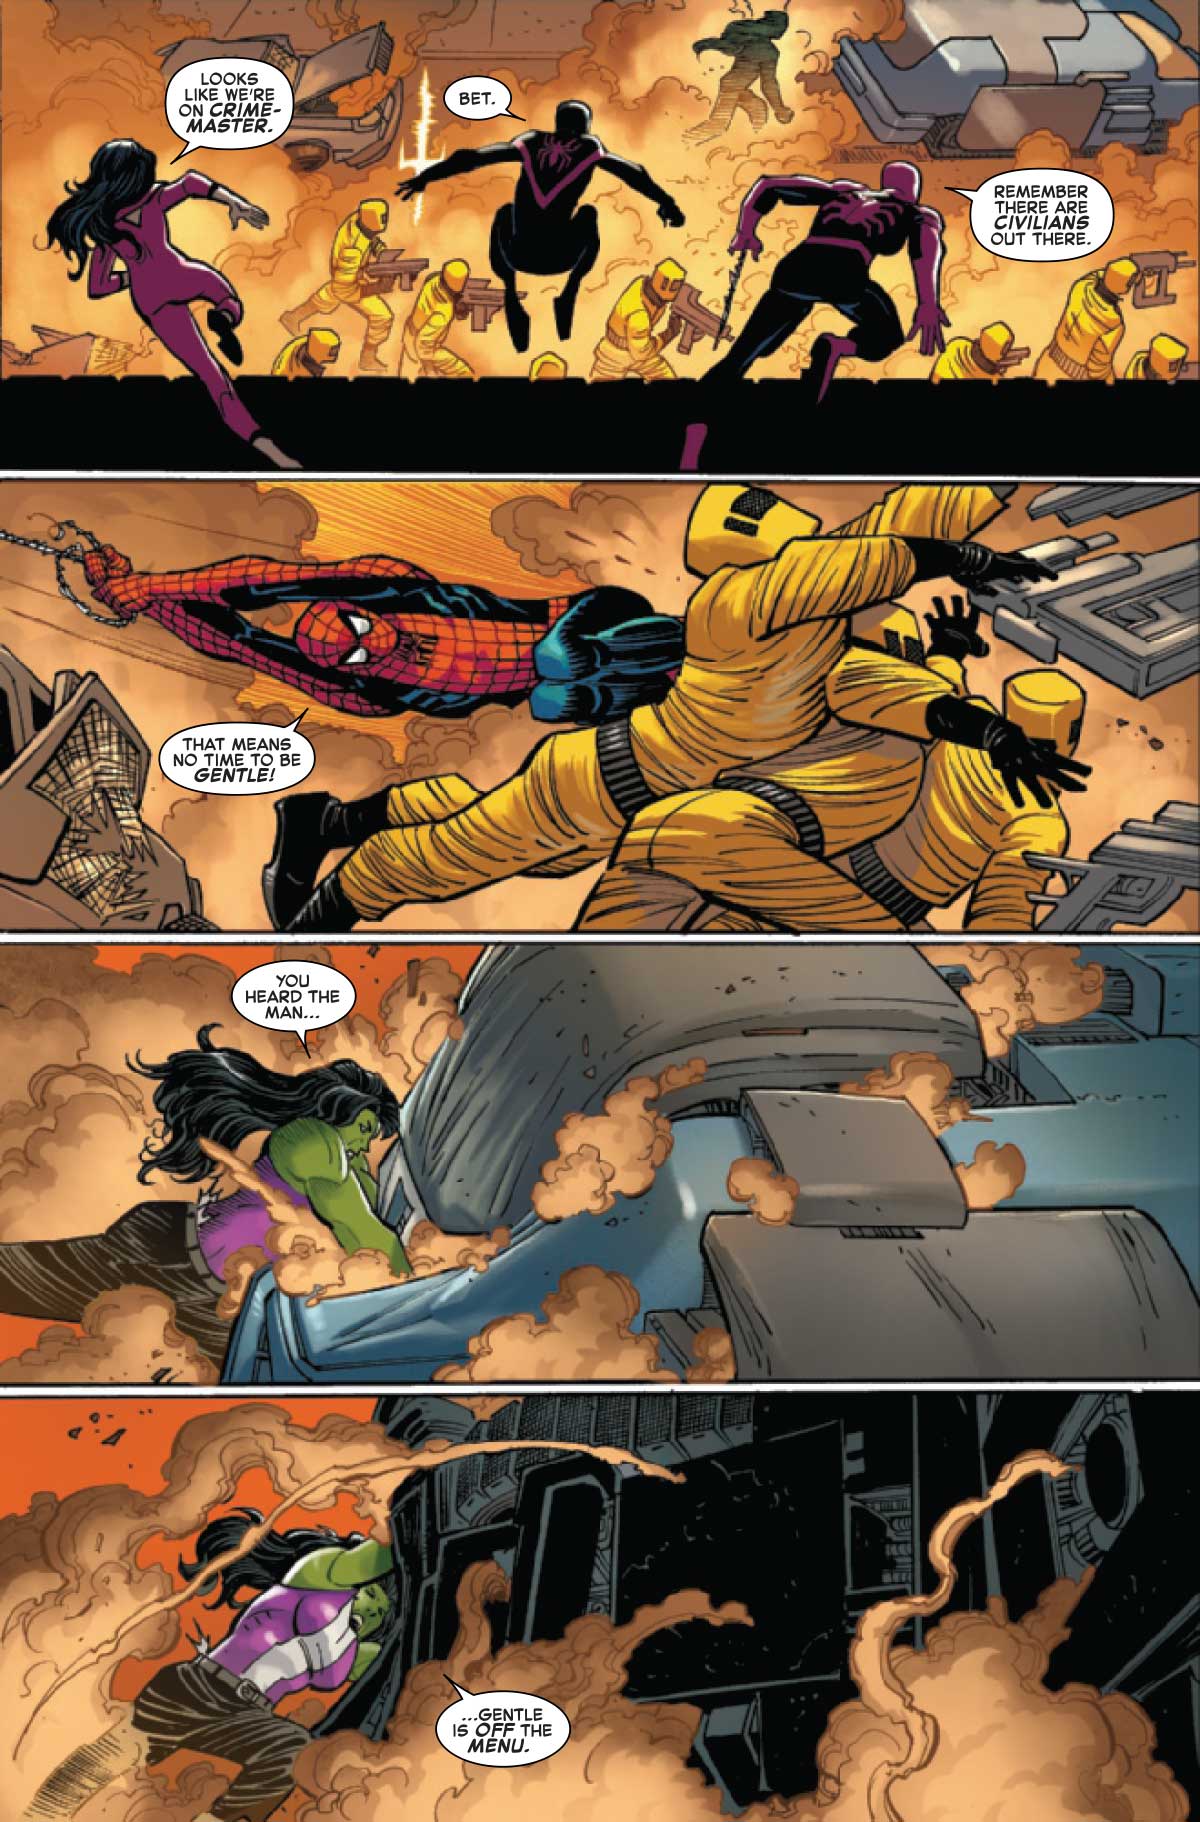 Amazing Spider-Man #39 Patrick Gleason Foil Variant (Gang War)